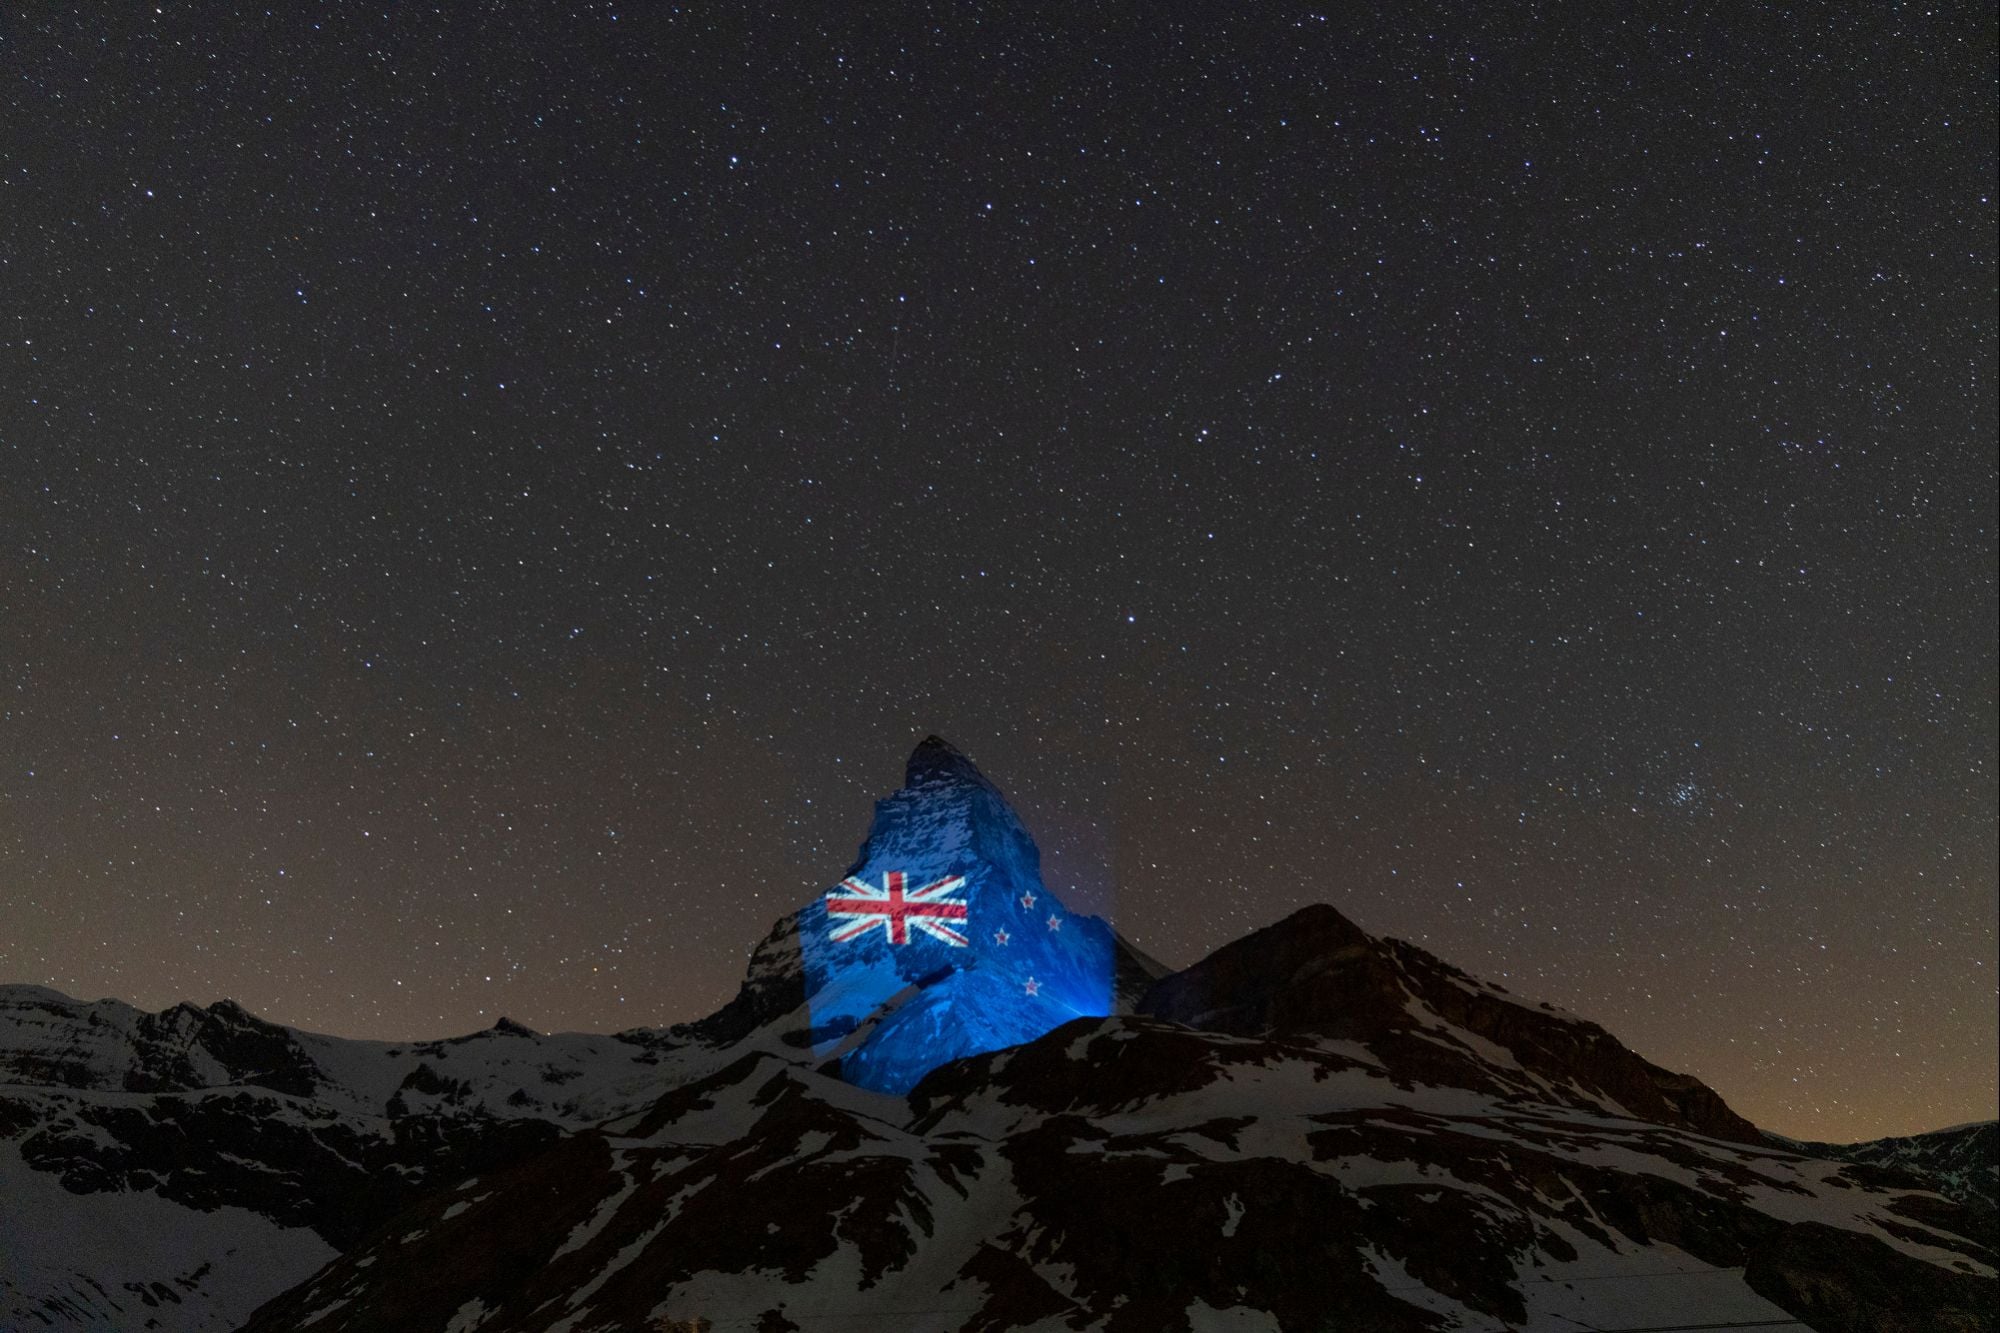 The lush blue Australian flag lights up the Matterhorn in the dead of a starry night. 